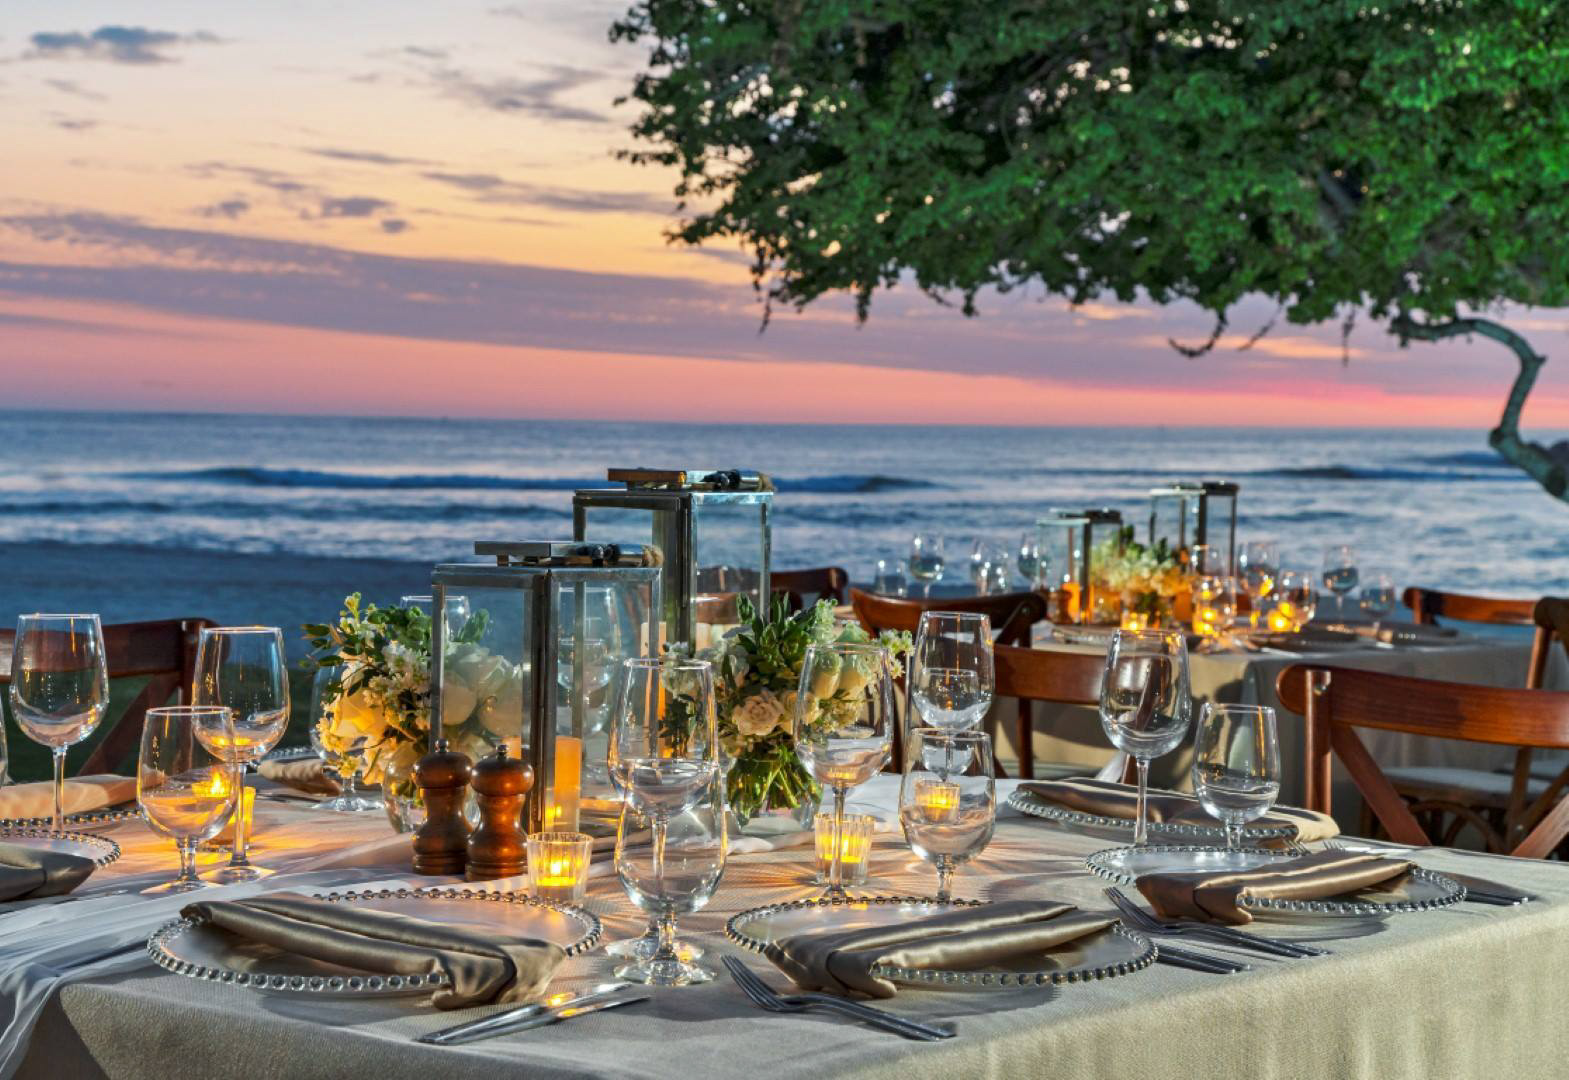 The St. Regis Punta Mita Resort - Nayarit, Mexico - Beachfront Dining at Sunset